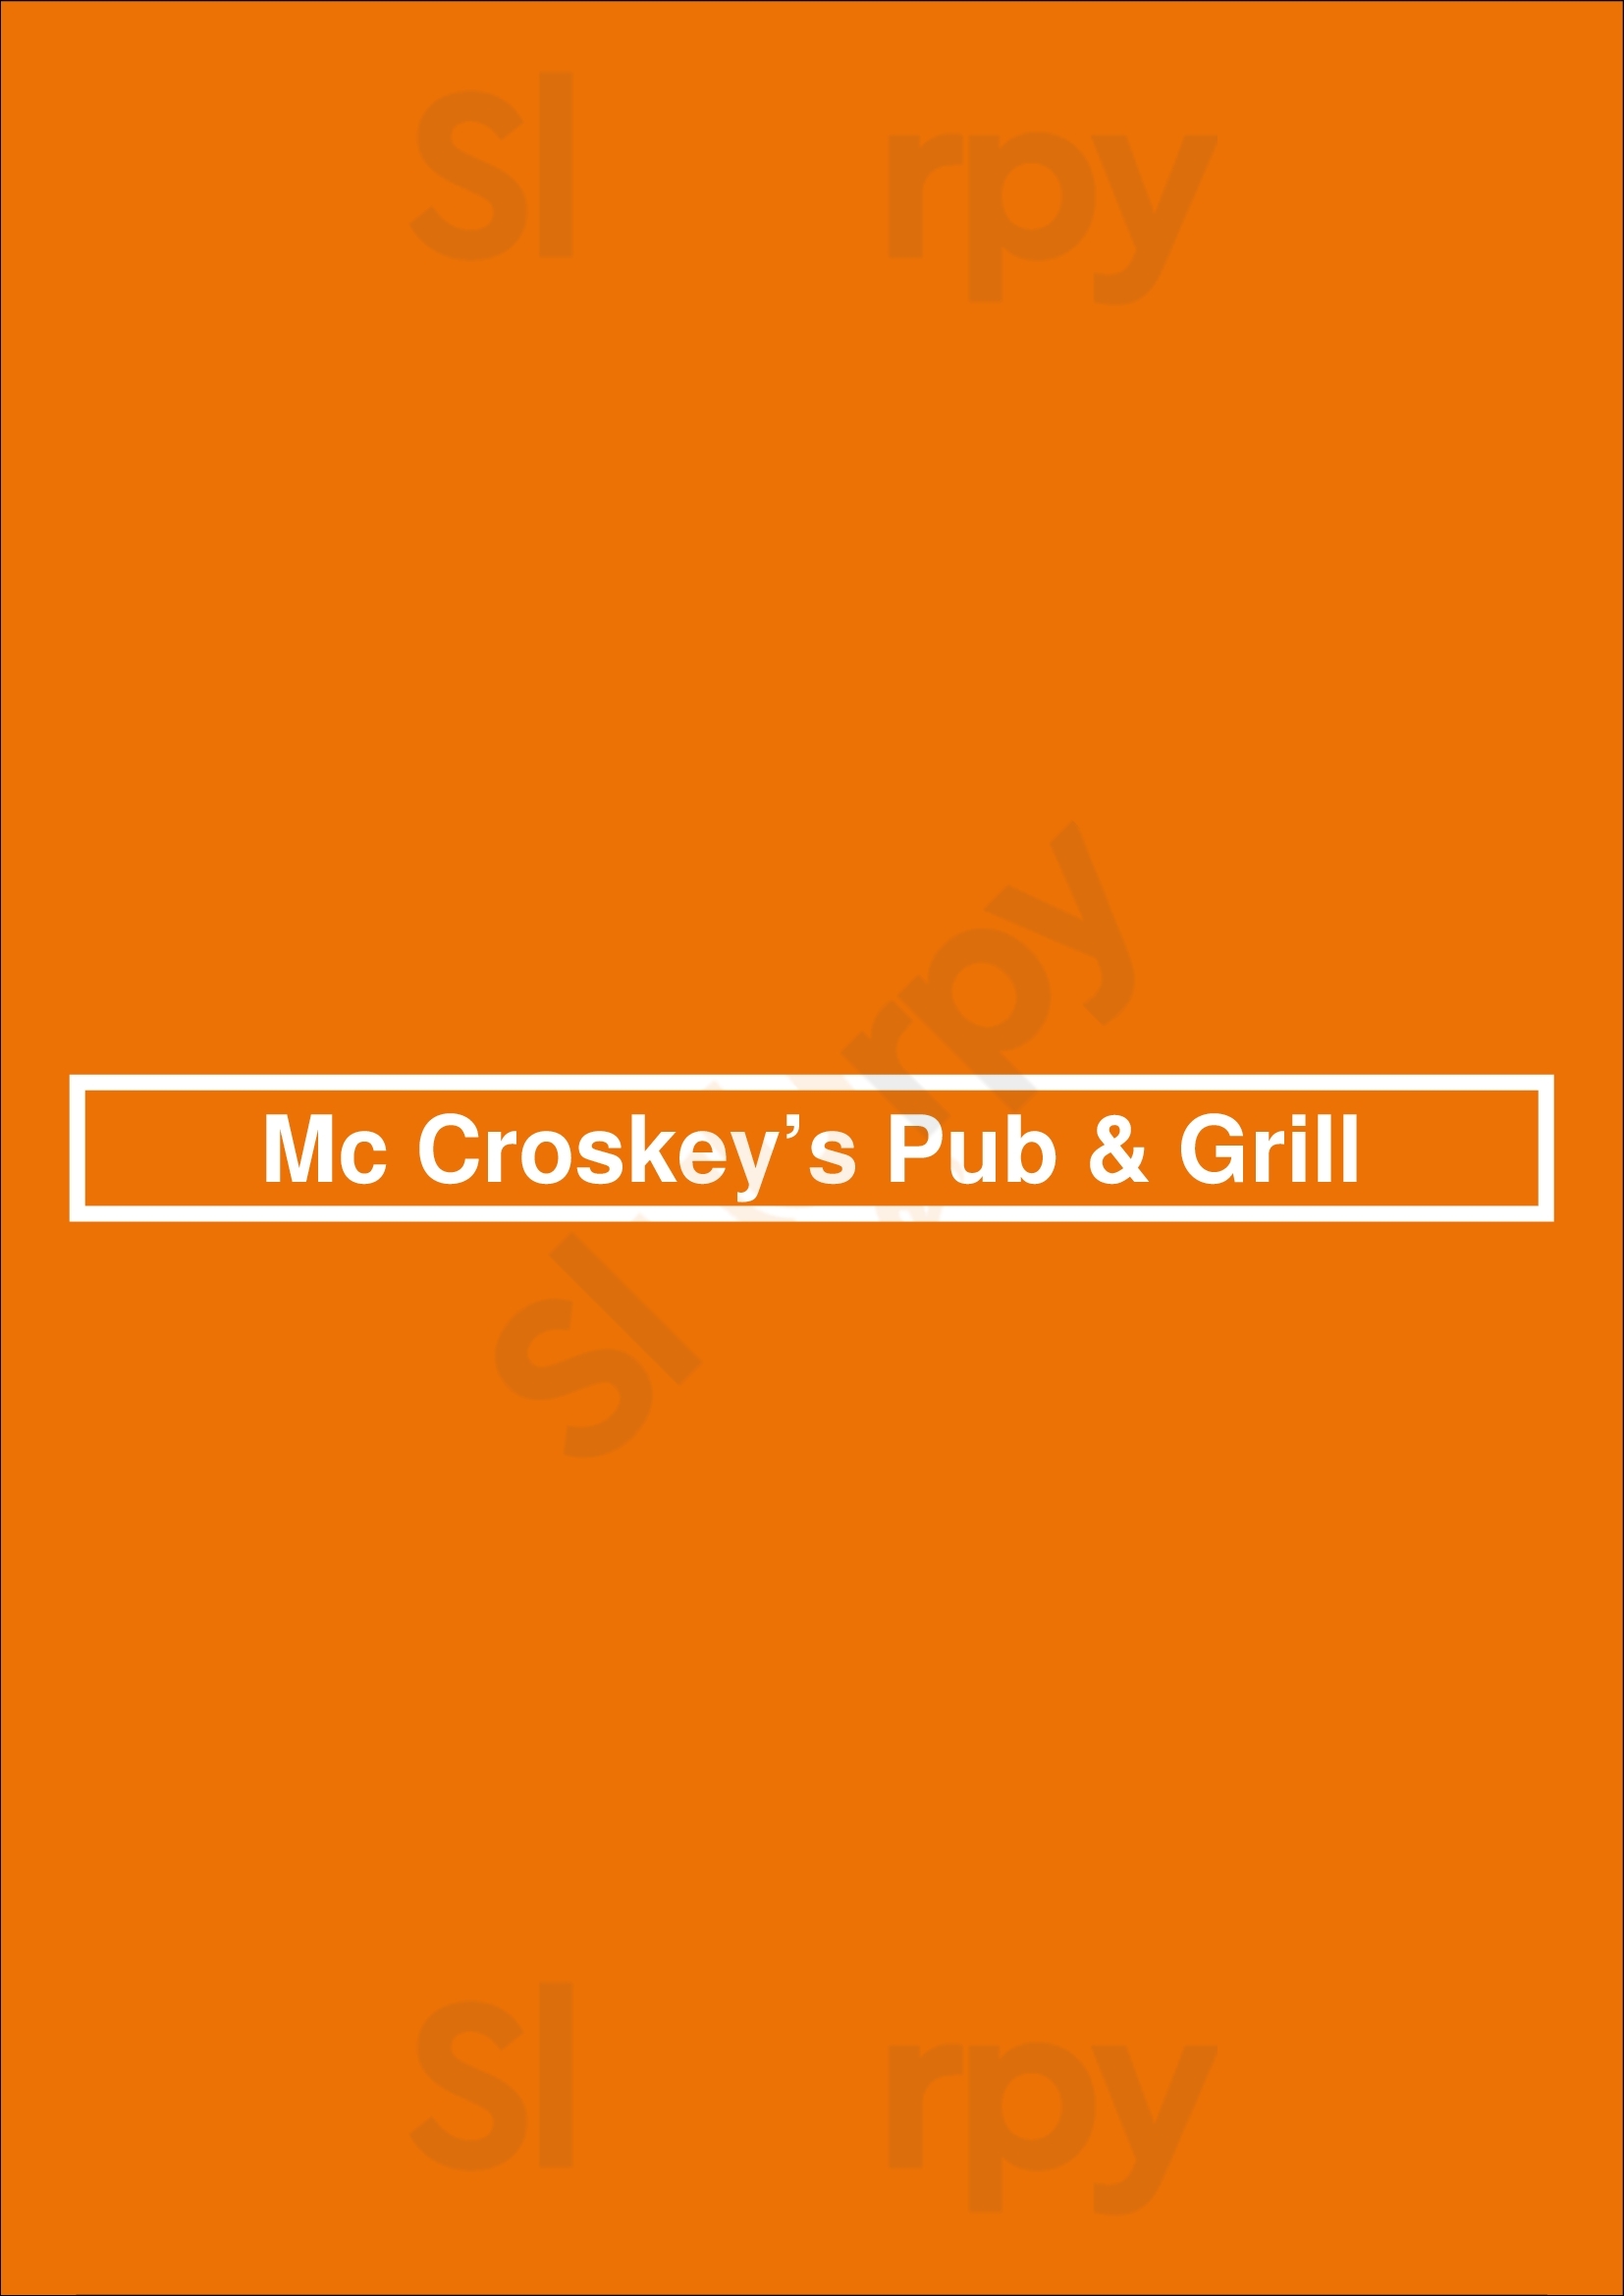 Mc Croskey’s Pub & Grill Toronto Menu - 1